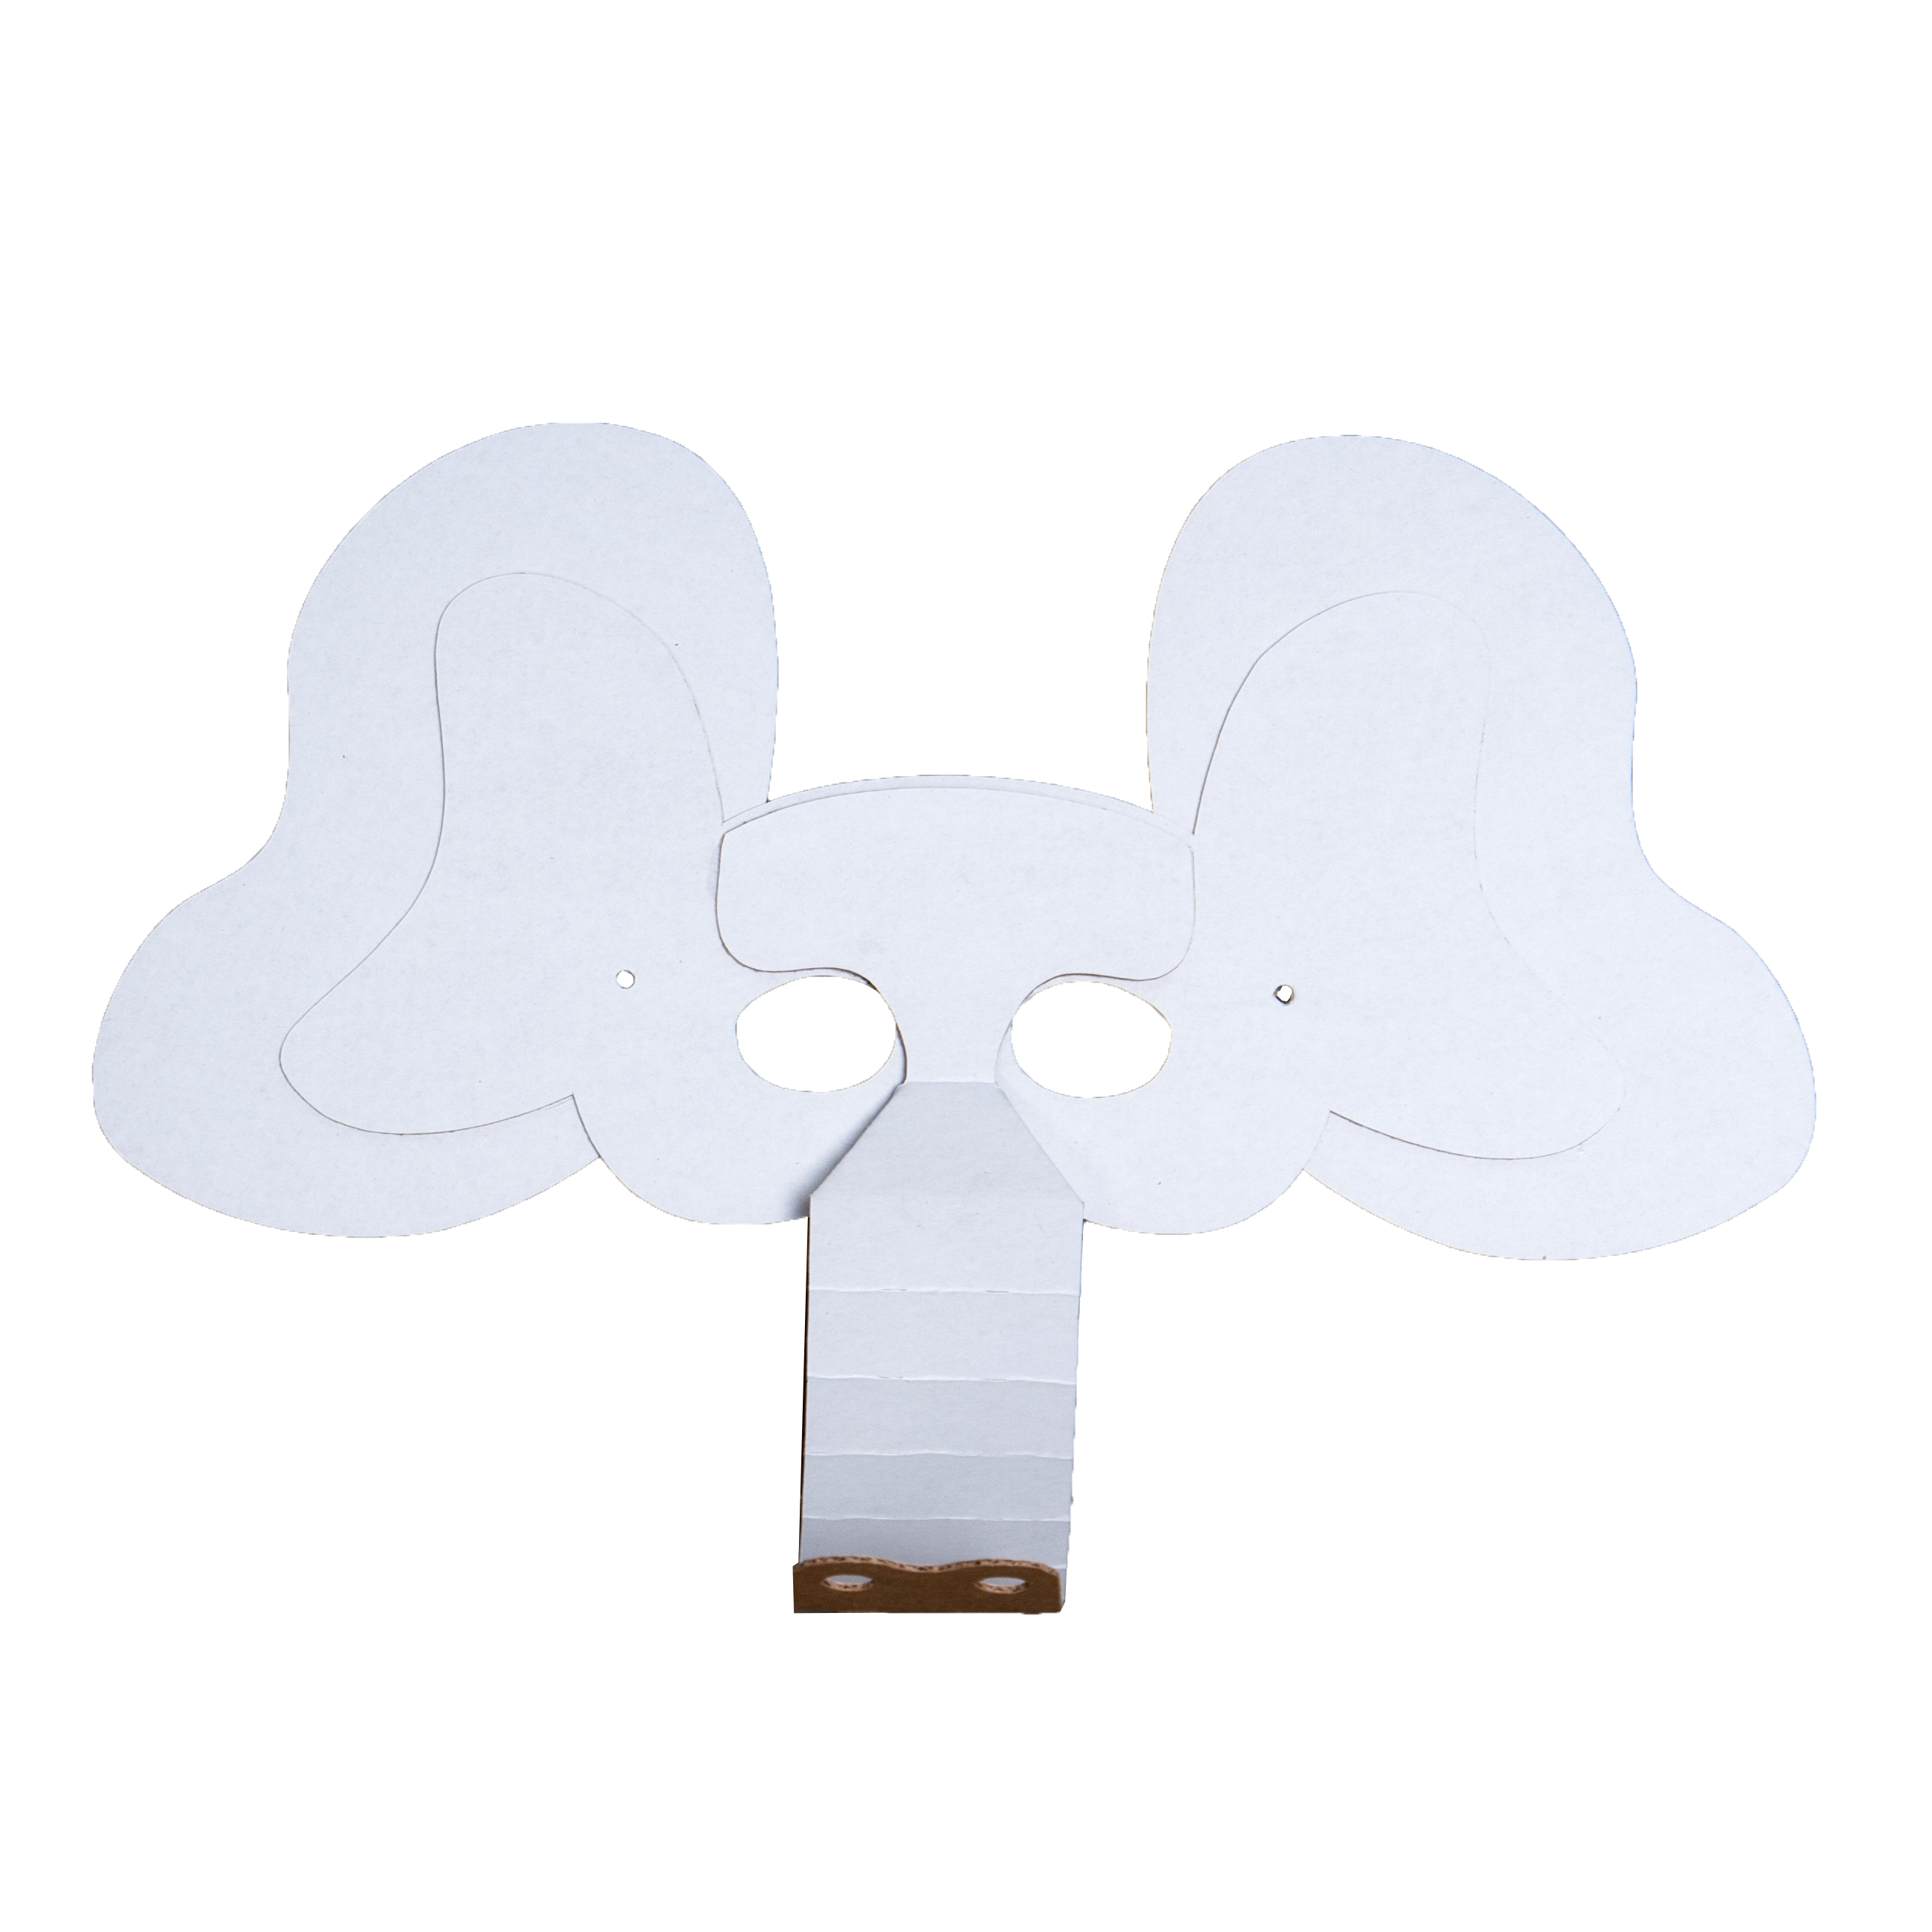 Elephant mask cardboard